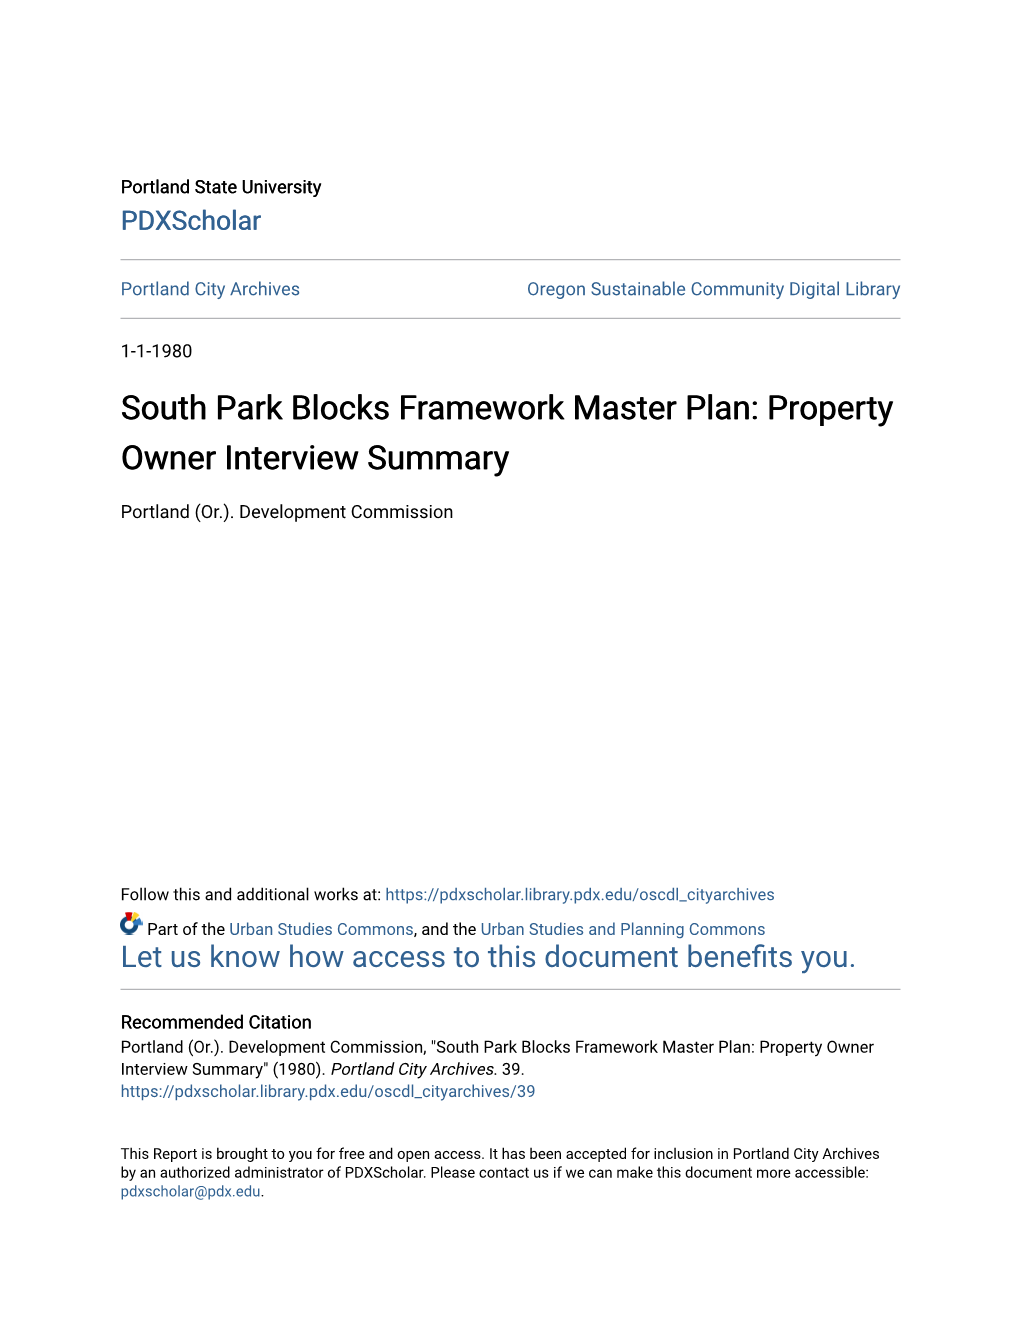 South Park Blocks Framework Master Plan: Property Owner Interview Summary